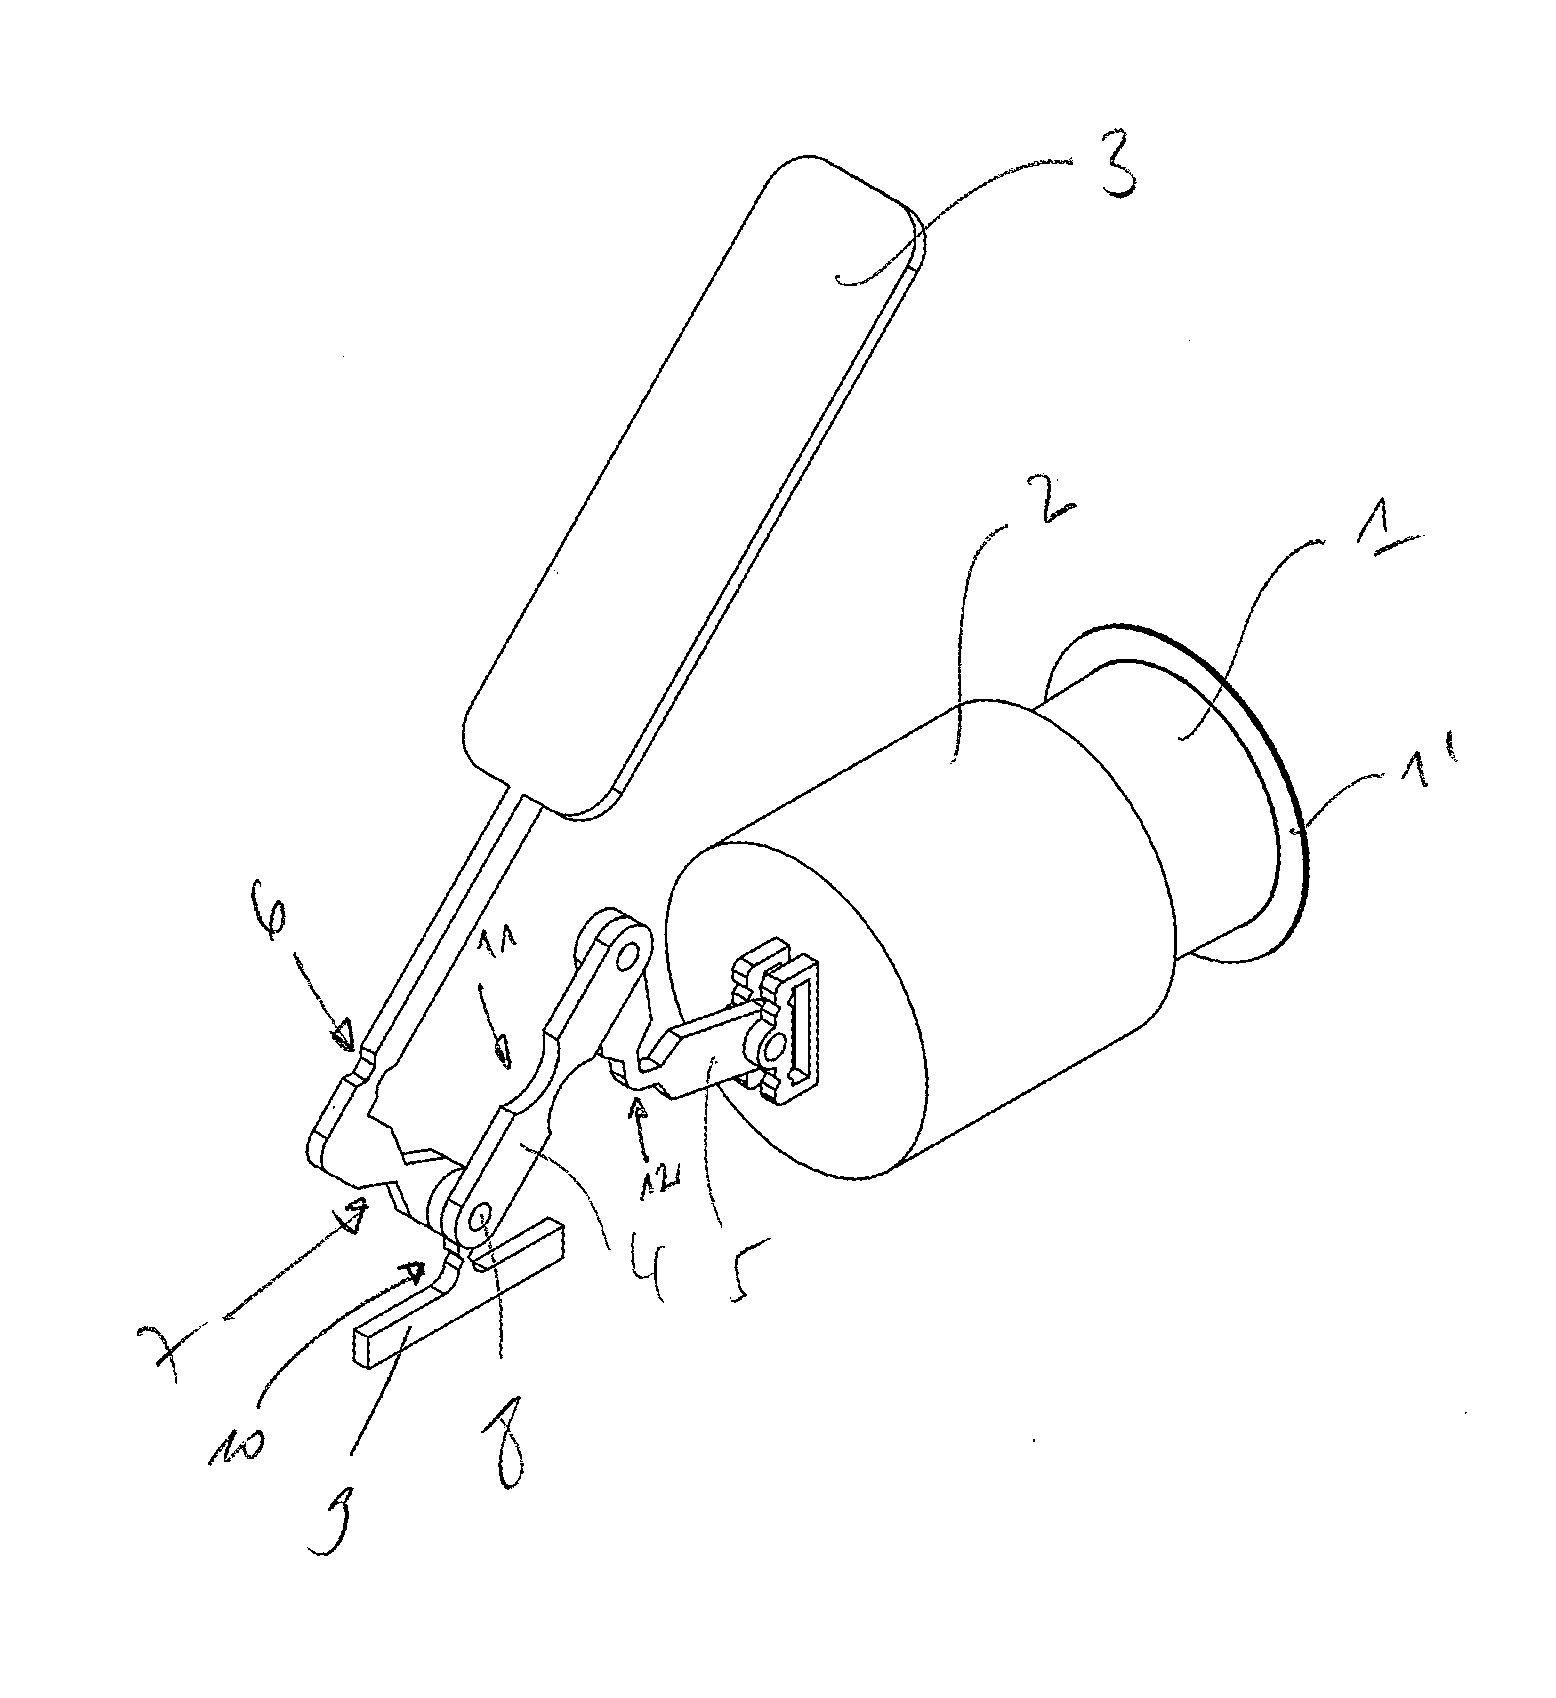 Capsule holder for preparing a beverage